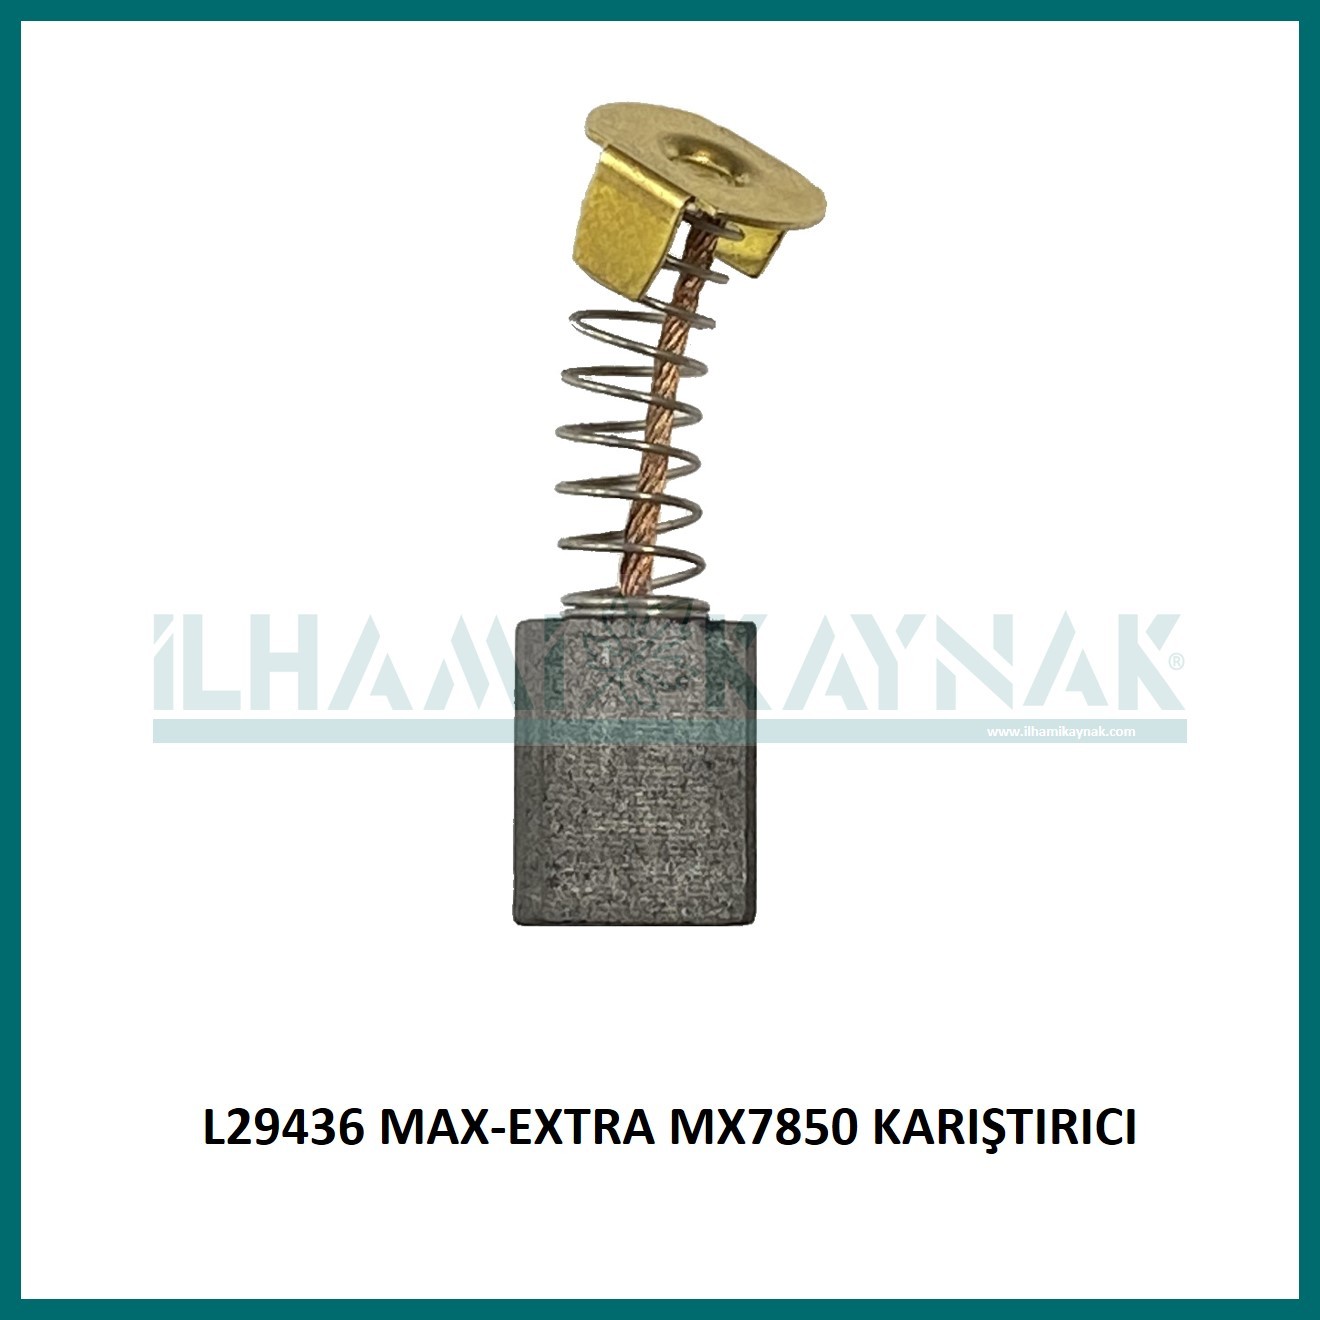 L29436 MAX-EXTRA MX7850 KARIŞTIRICI - 6*12*16.5 mm - 100 Adet